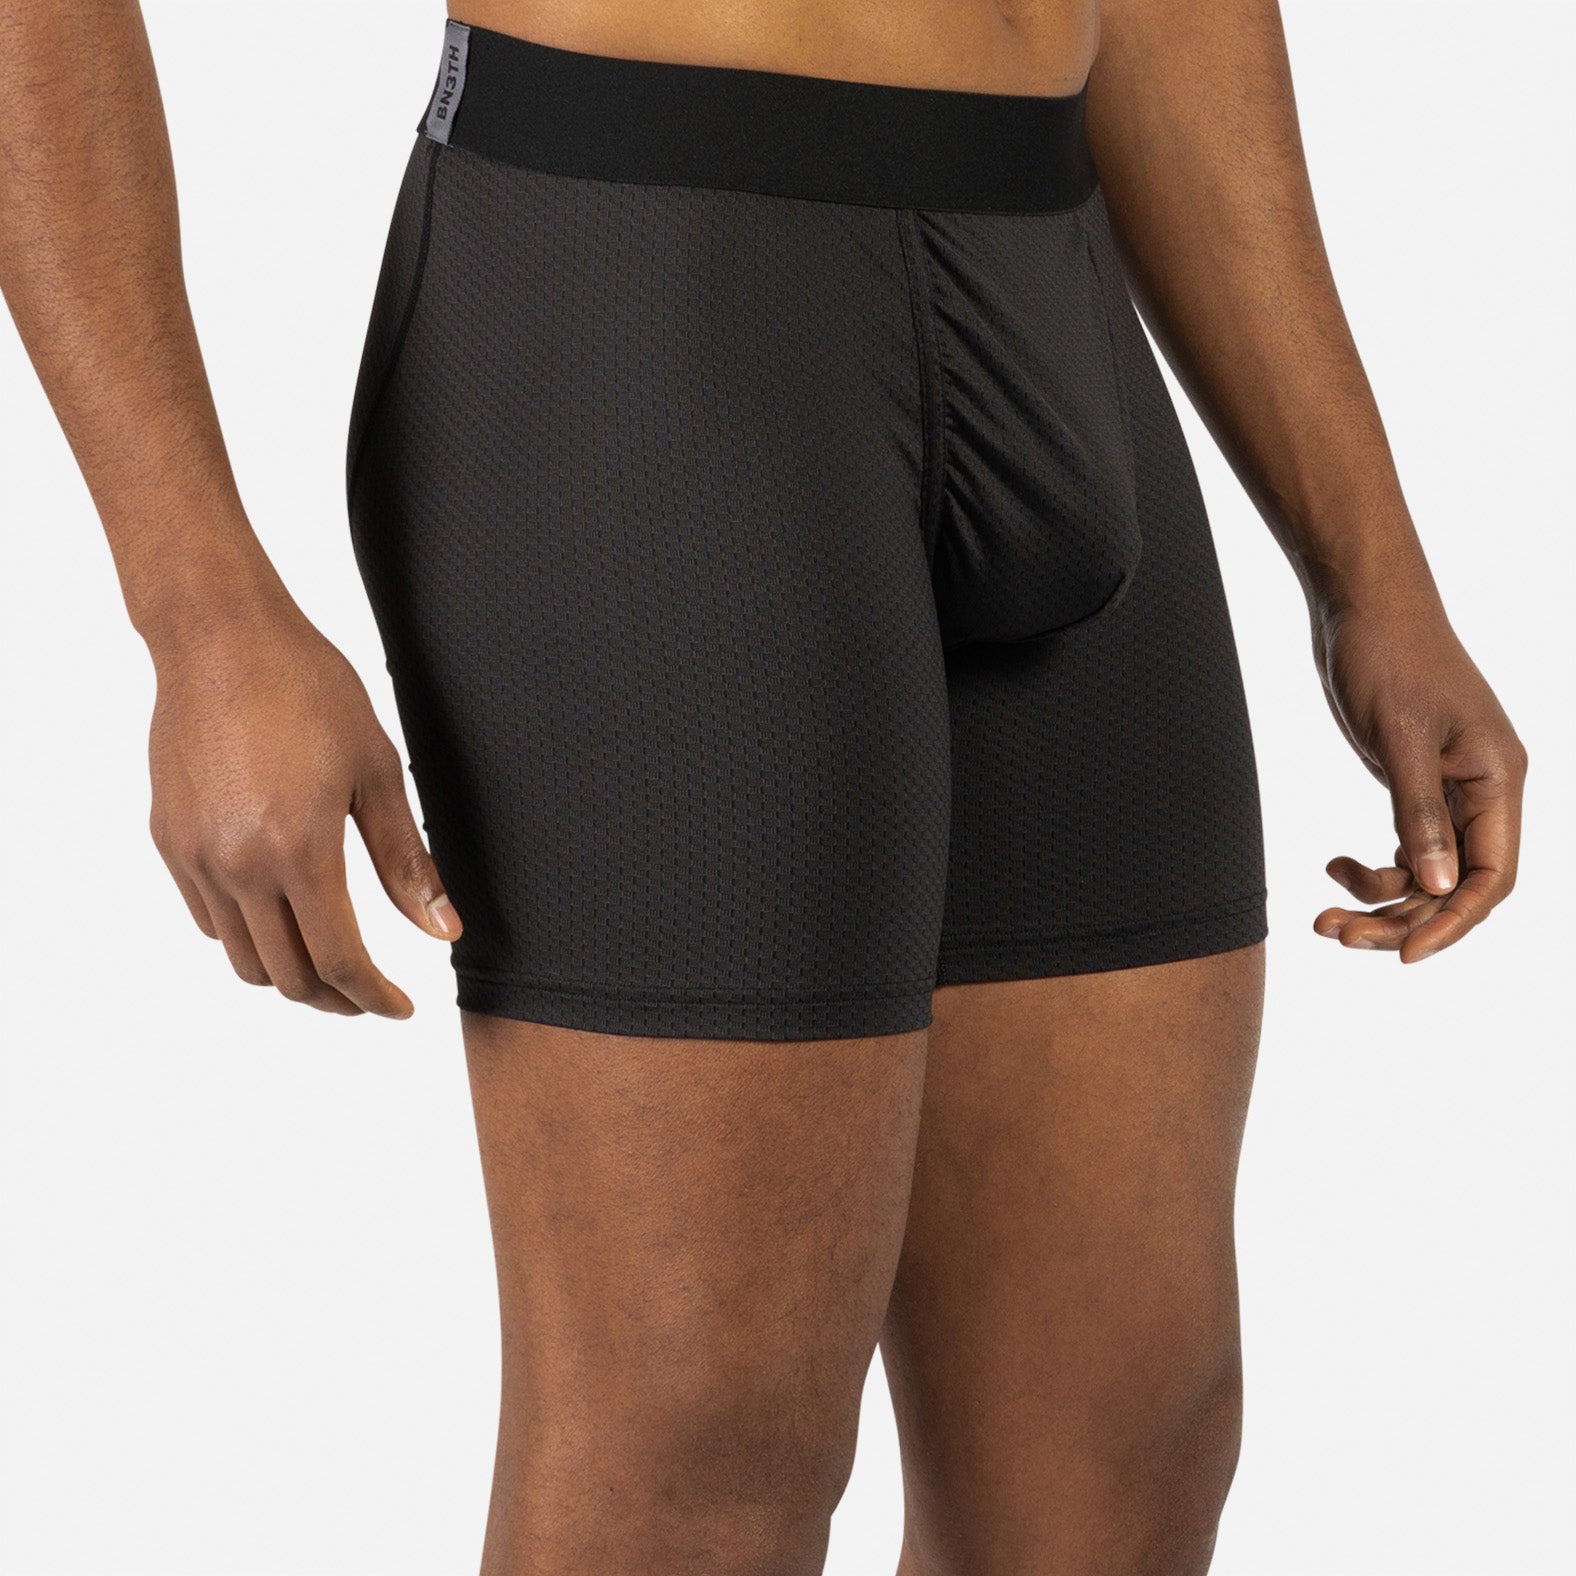 BN3TH Men's Hero Knit Athletic Boxer Briefs - Underwear with